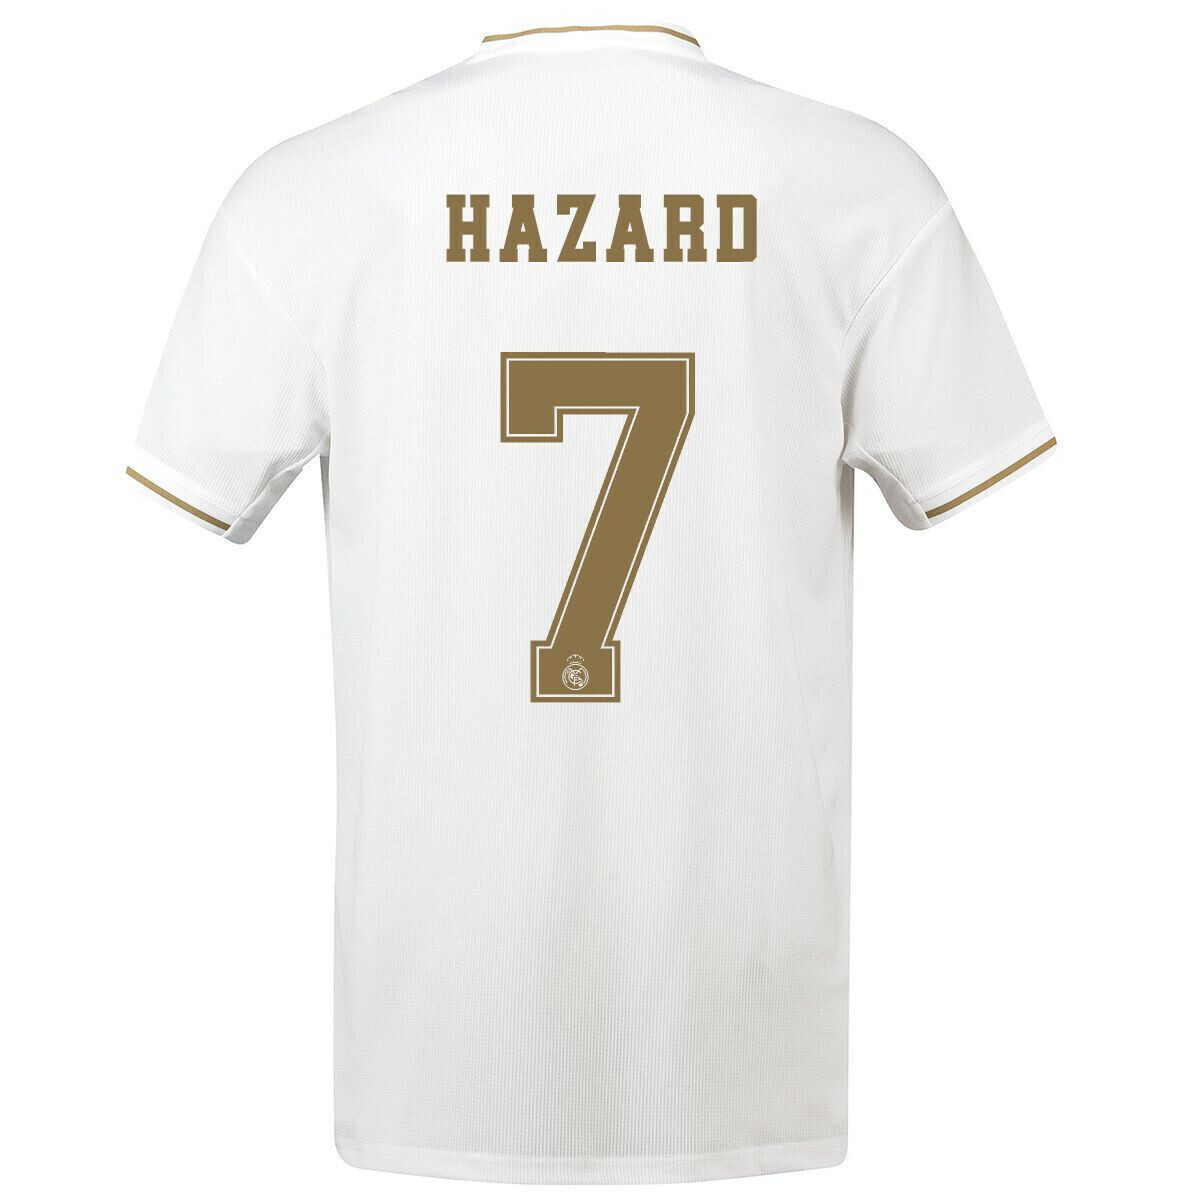 Real Madrid Hazard Jersey 19/20